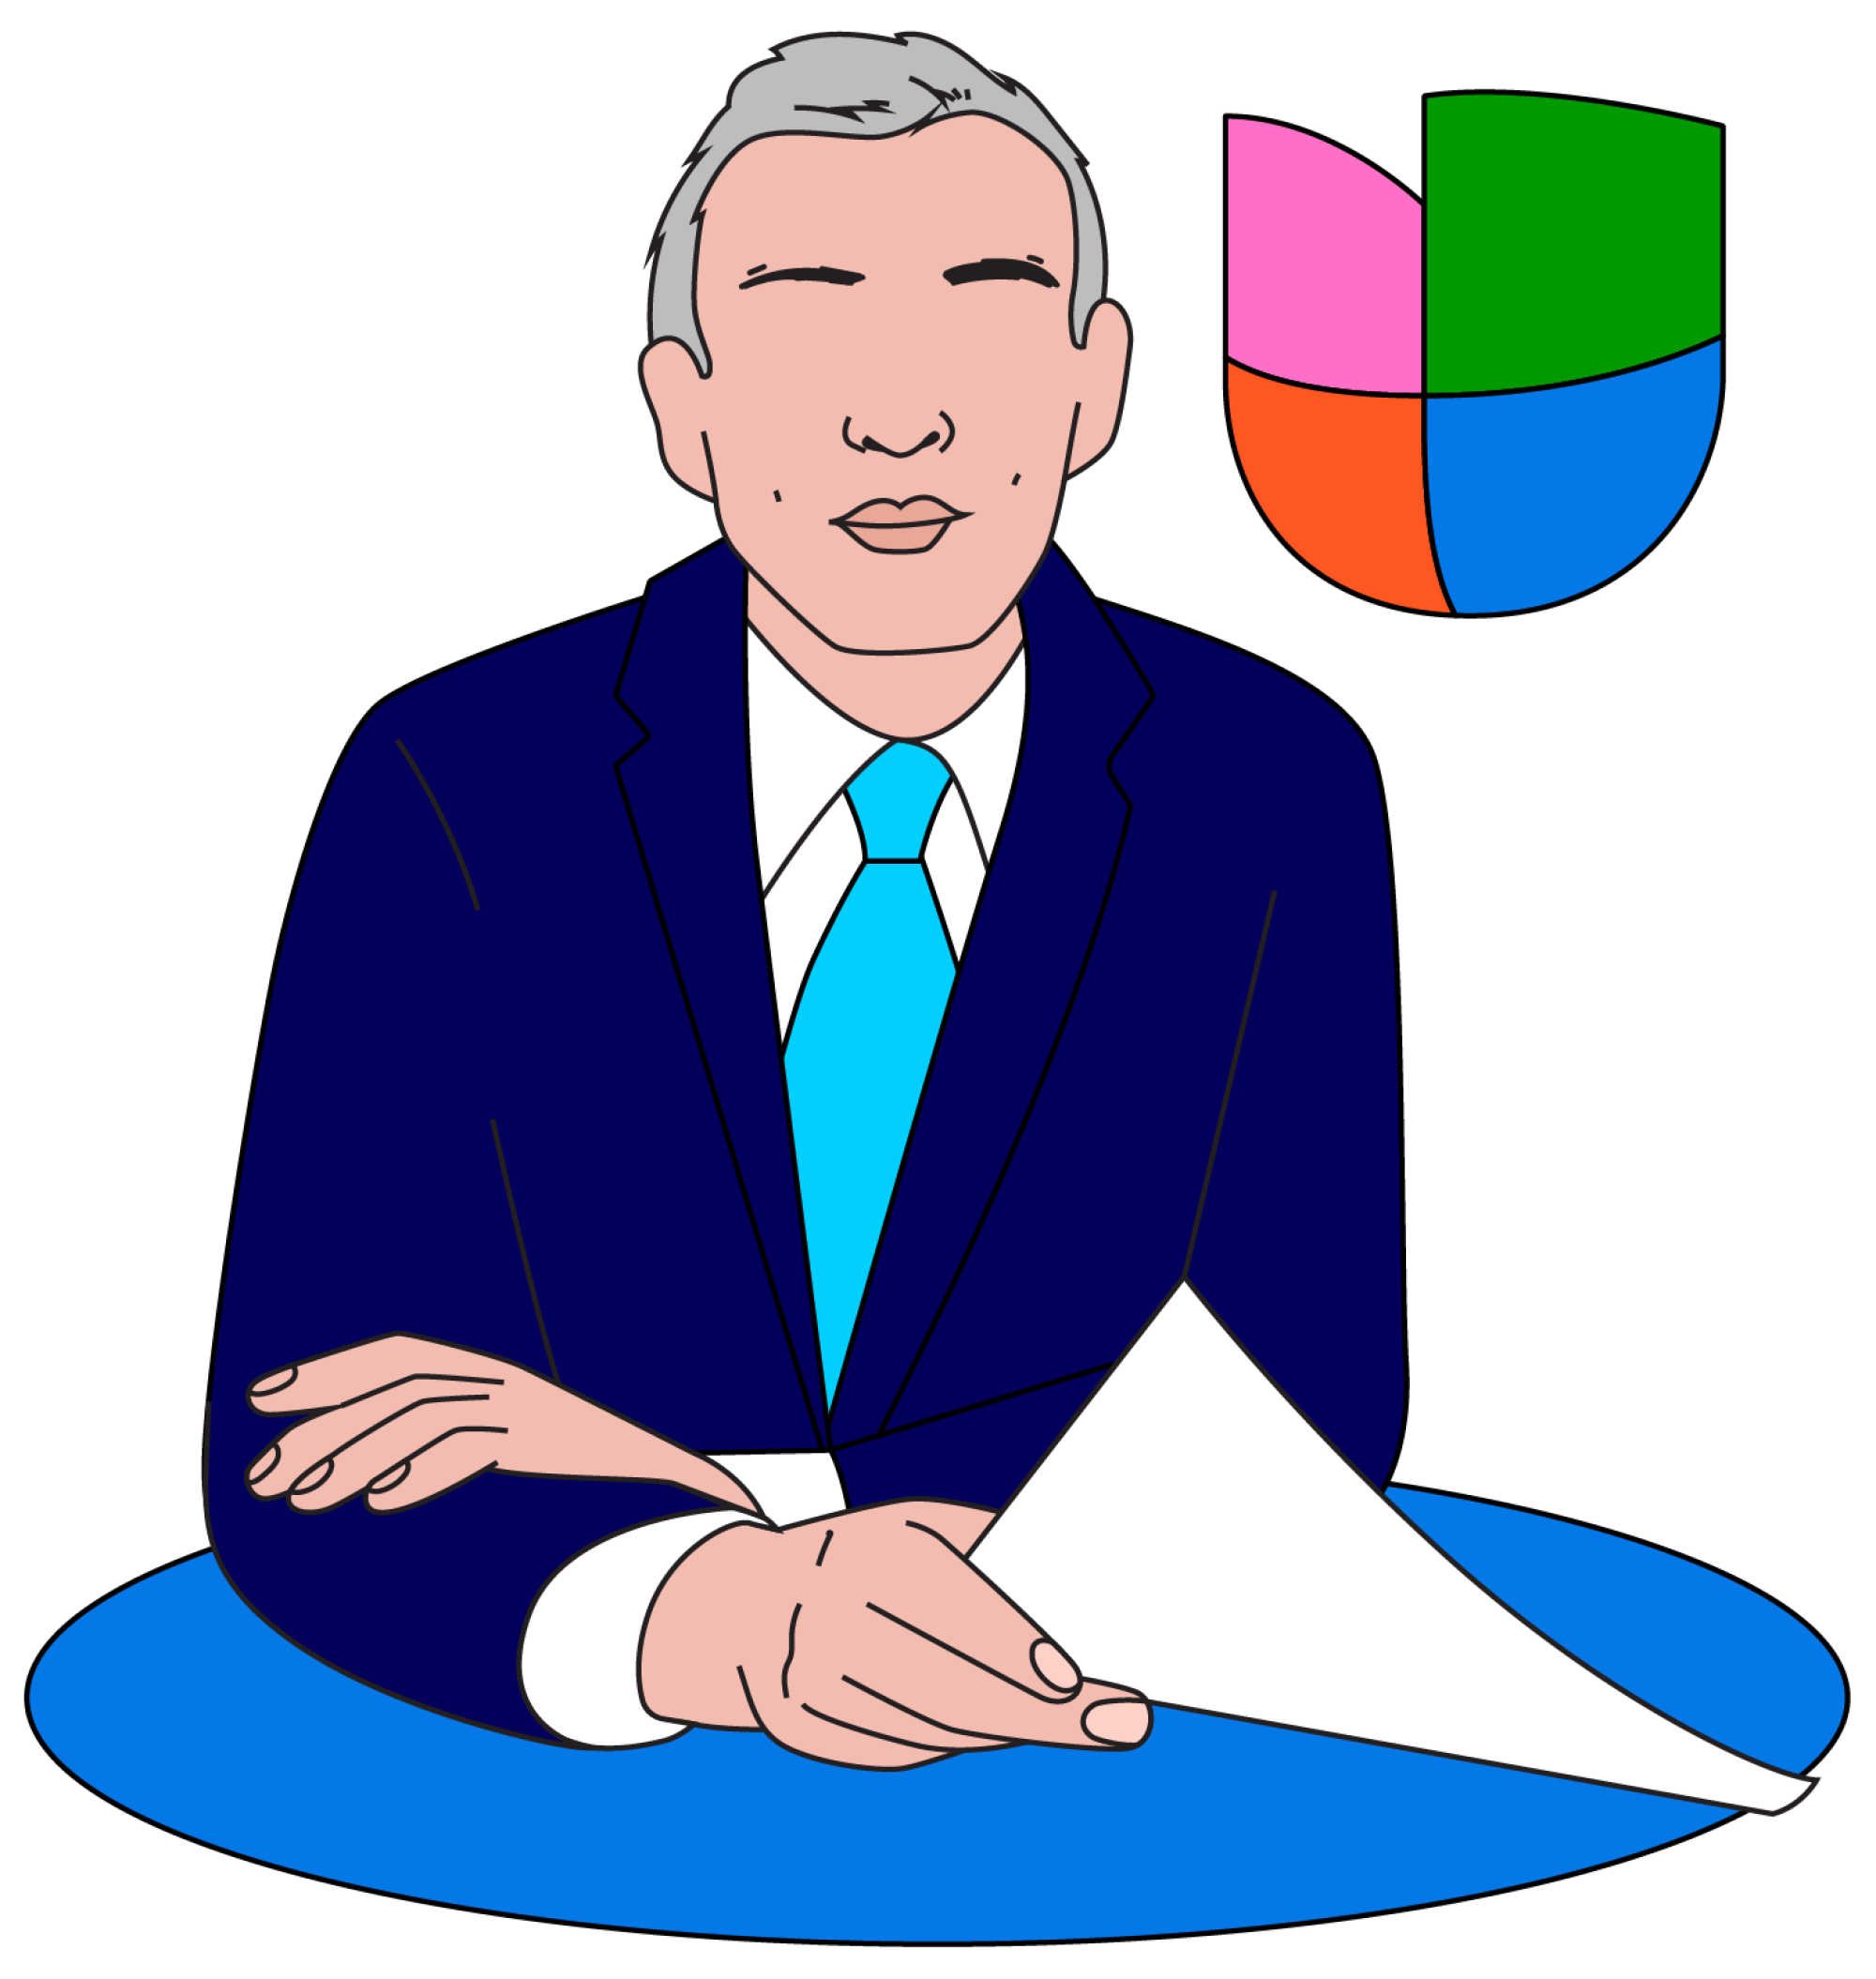 Illustration of Univision newscaster Jorge Ramos